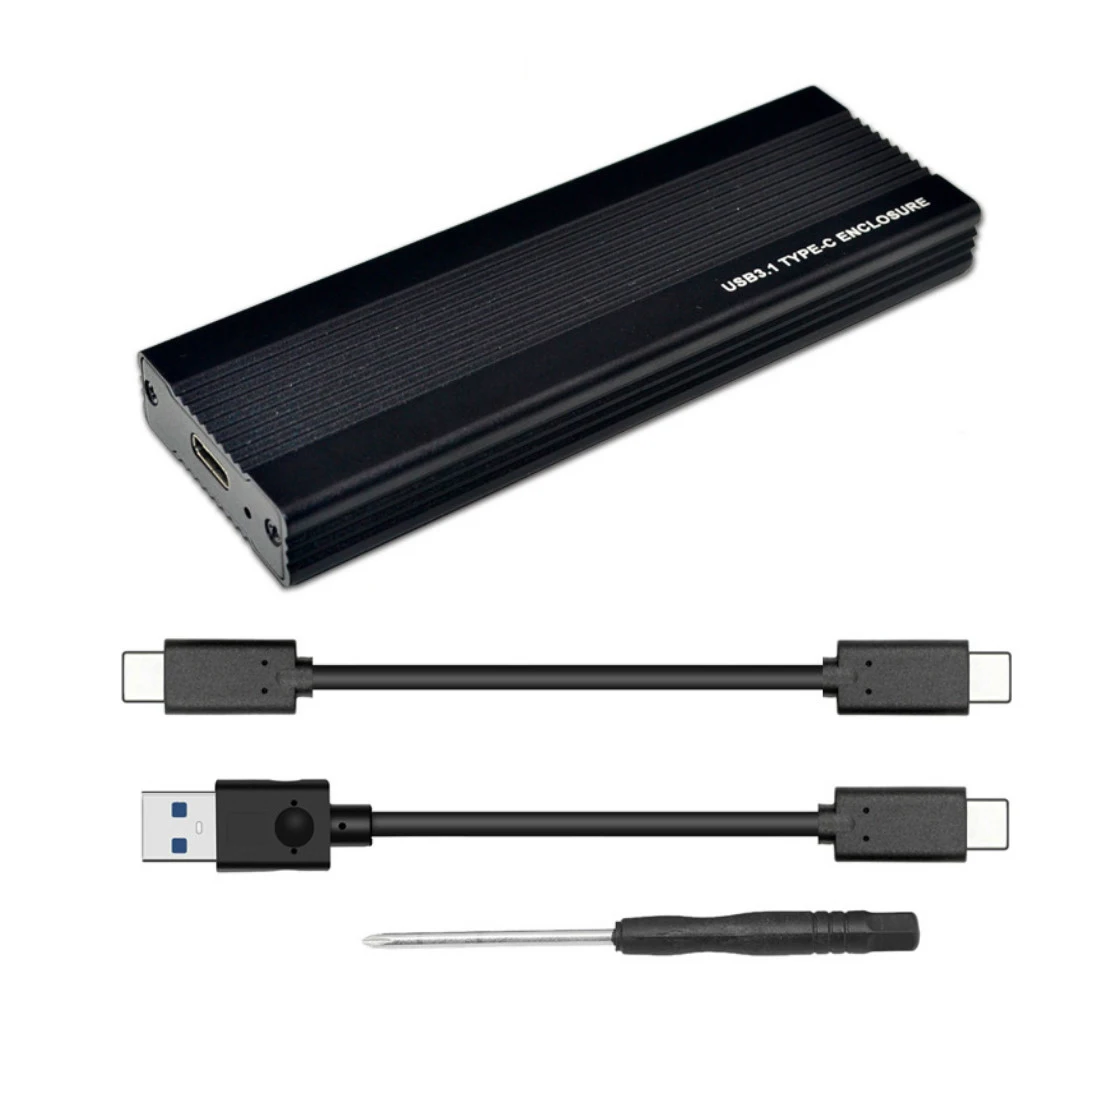 

H1111Z NVME SSD Enclosure PCIE M.2 to USB 3.1 Type-C Adapter USB C 10Gbps RTL9210 M2 M Key PCIE Hard Drive Disk External Box M2